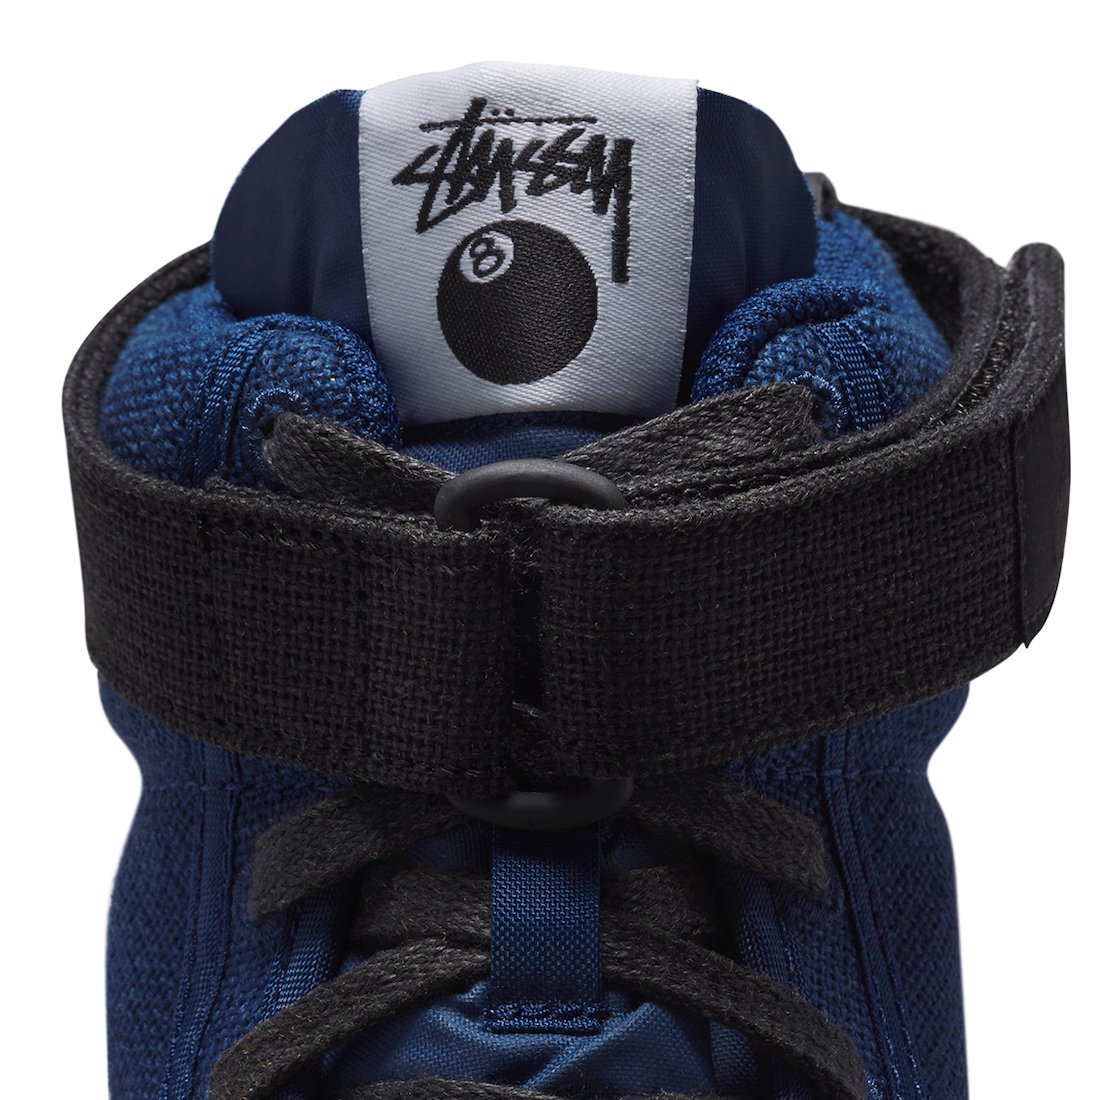 Stussy Nike Vandal High Bleu Royal Profond DX5425-400